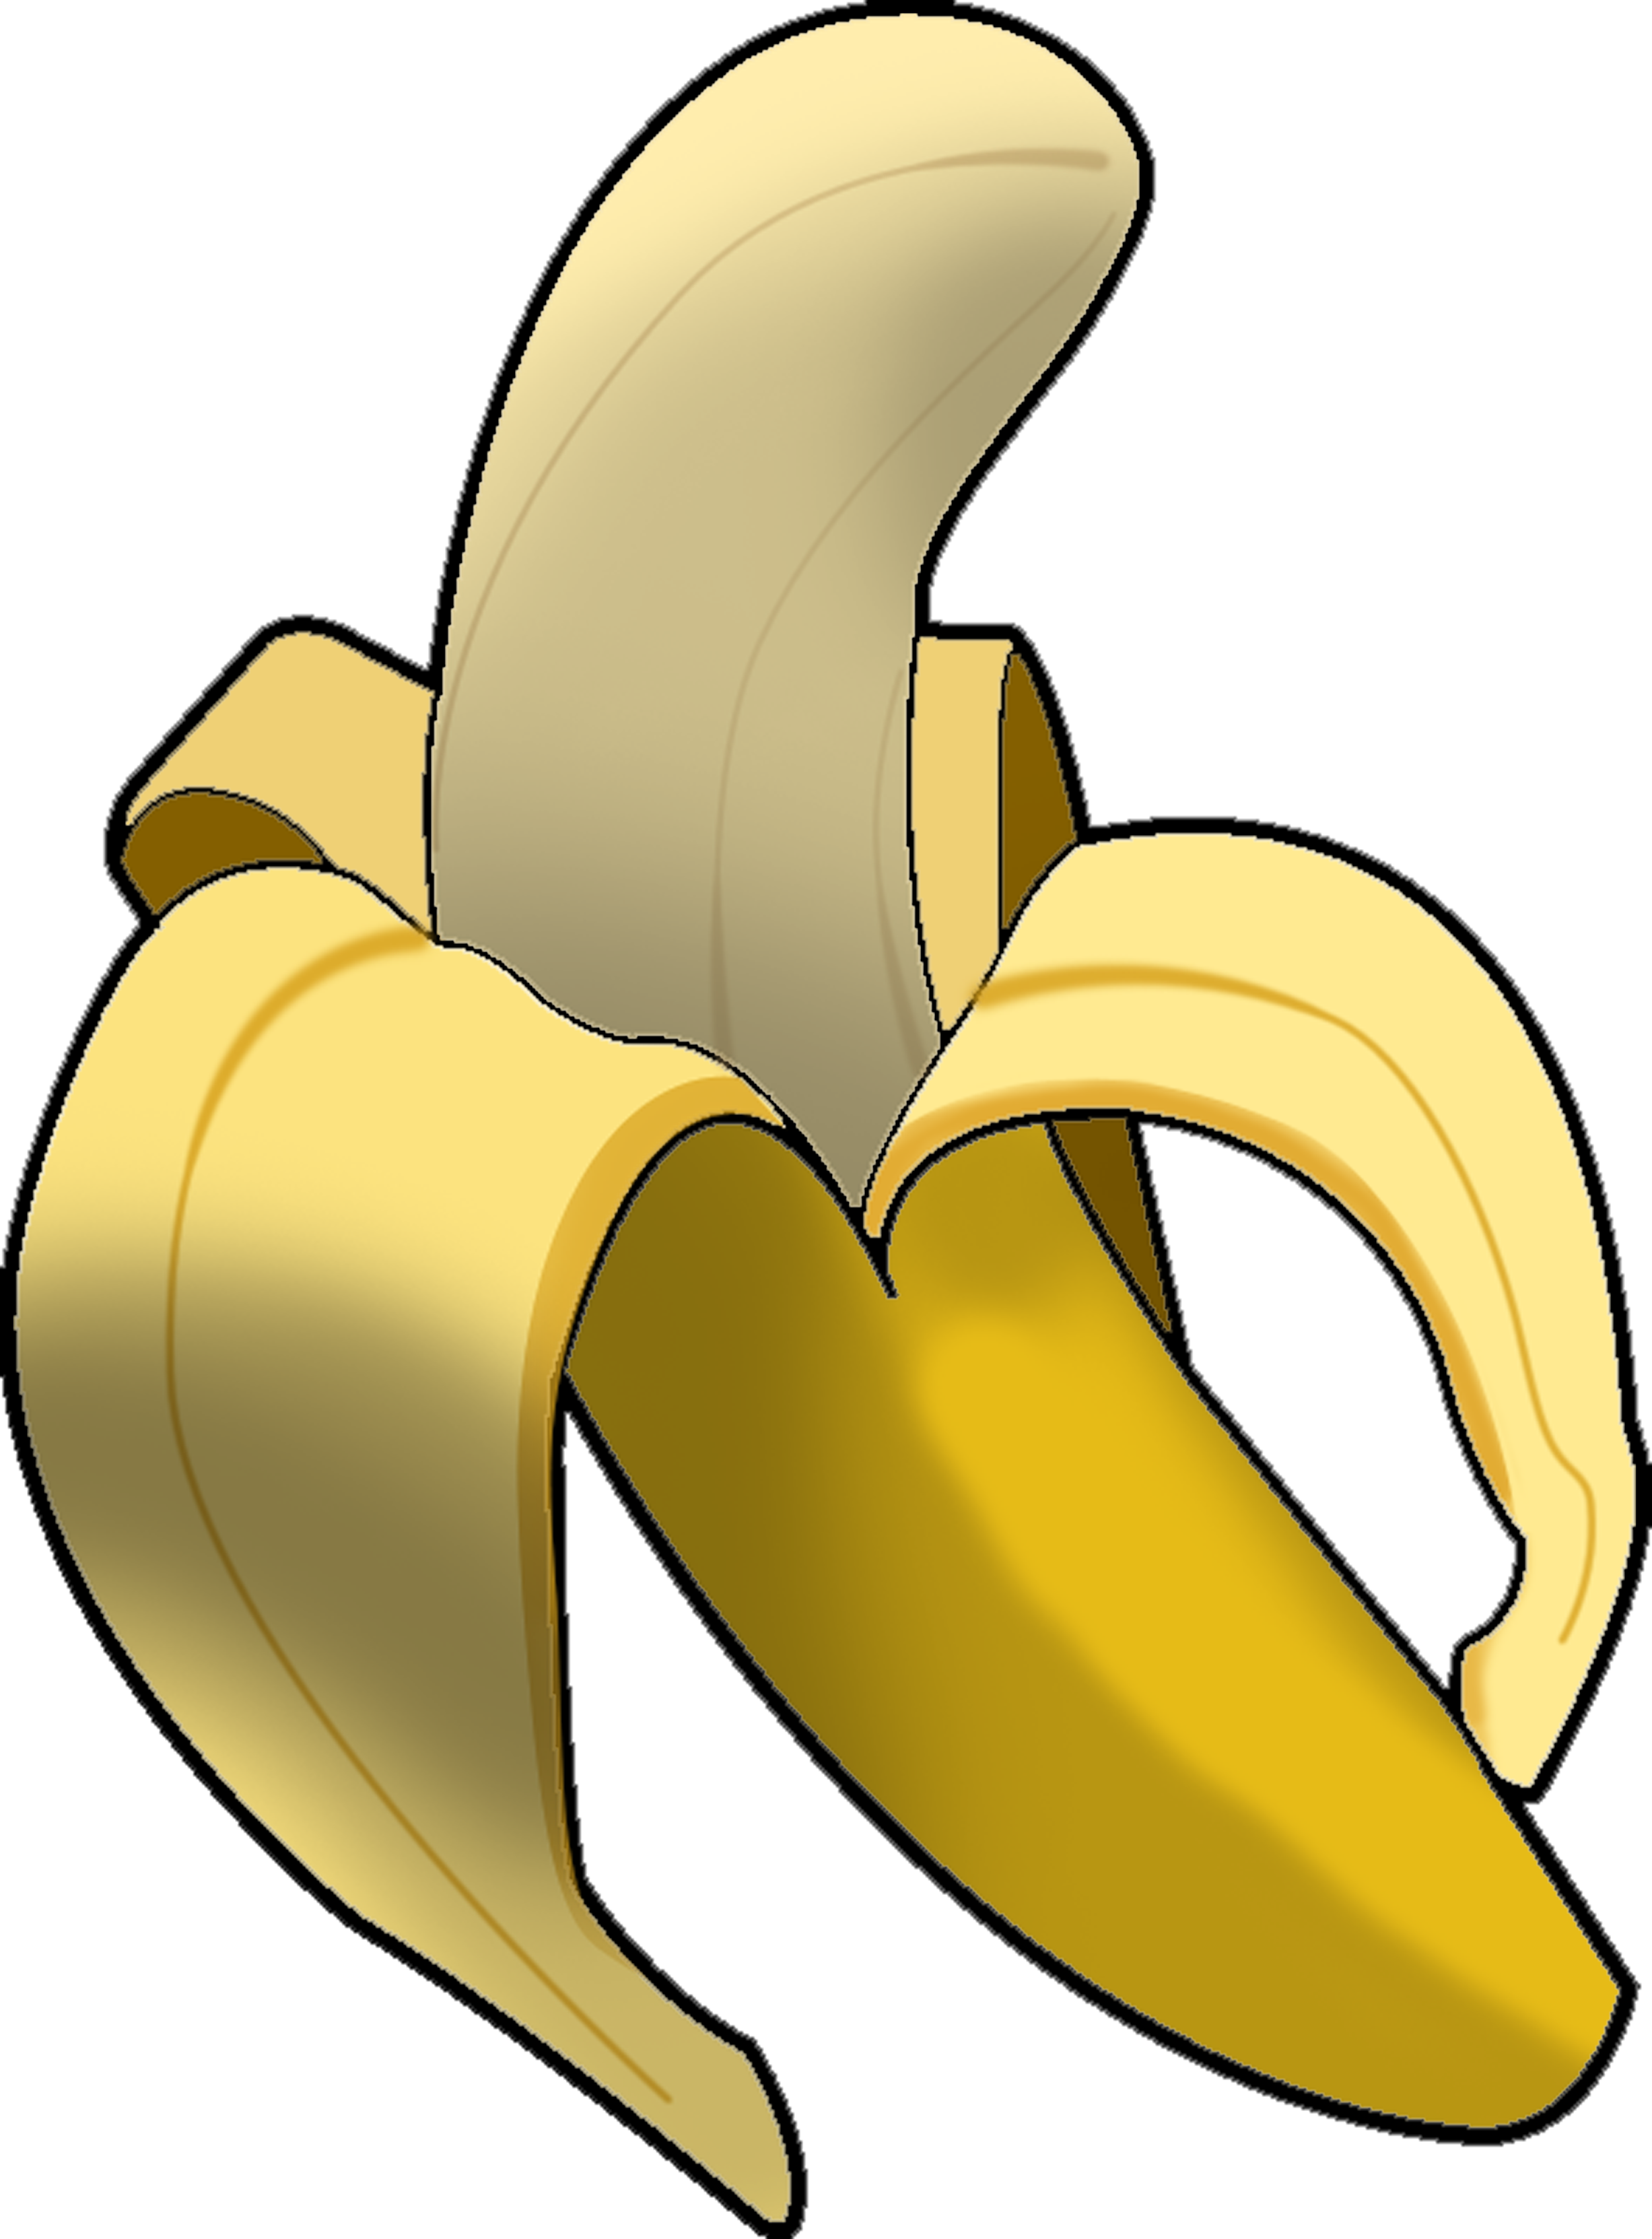 Macular degeneration association reasons. Bananas clipart 5 banana